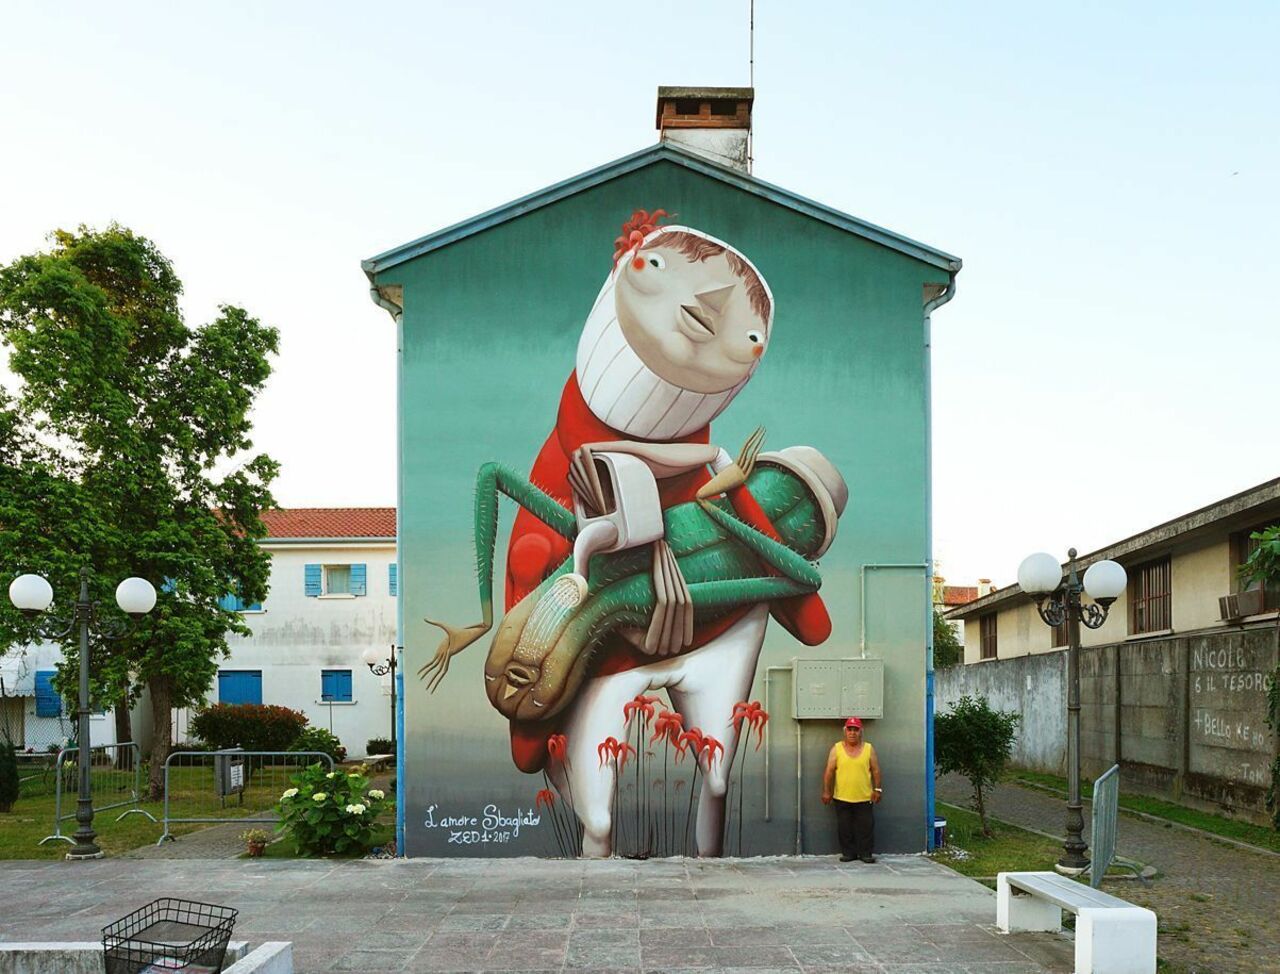 “The Wrong Love” by ZED1 in Dolo, Italy #streetart #mural #graffiti #art https://t.co/OsBlHuVNyG